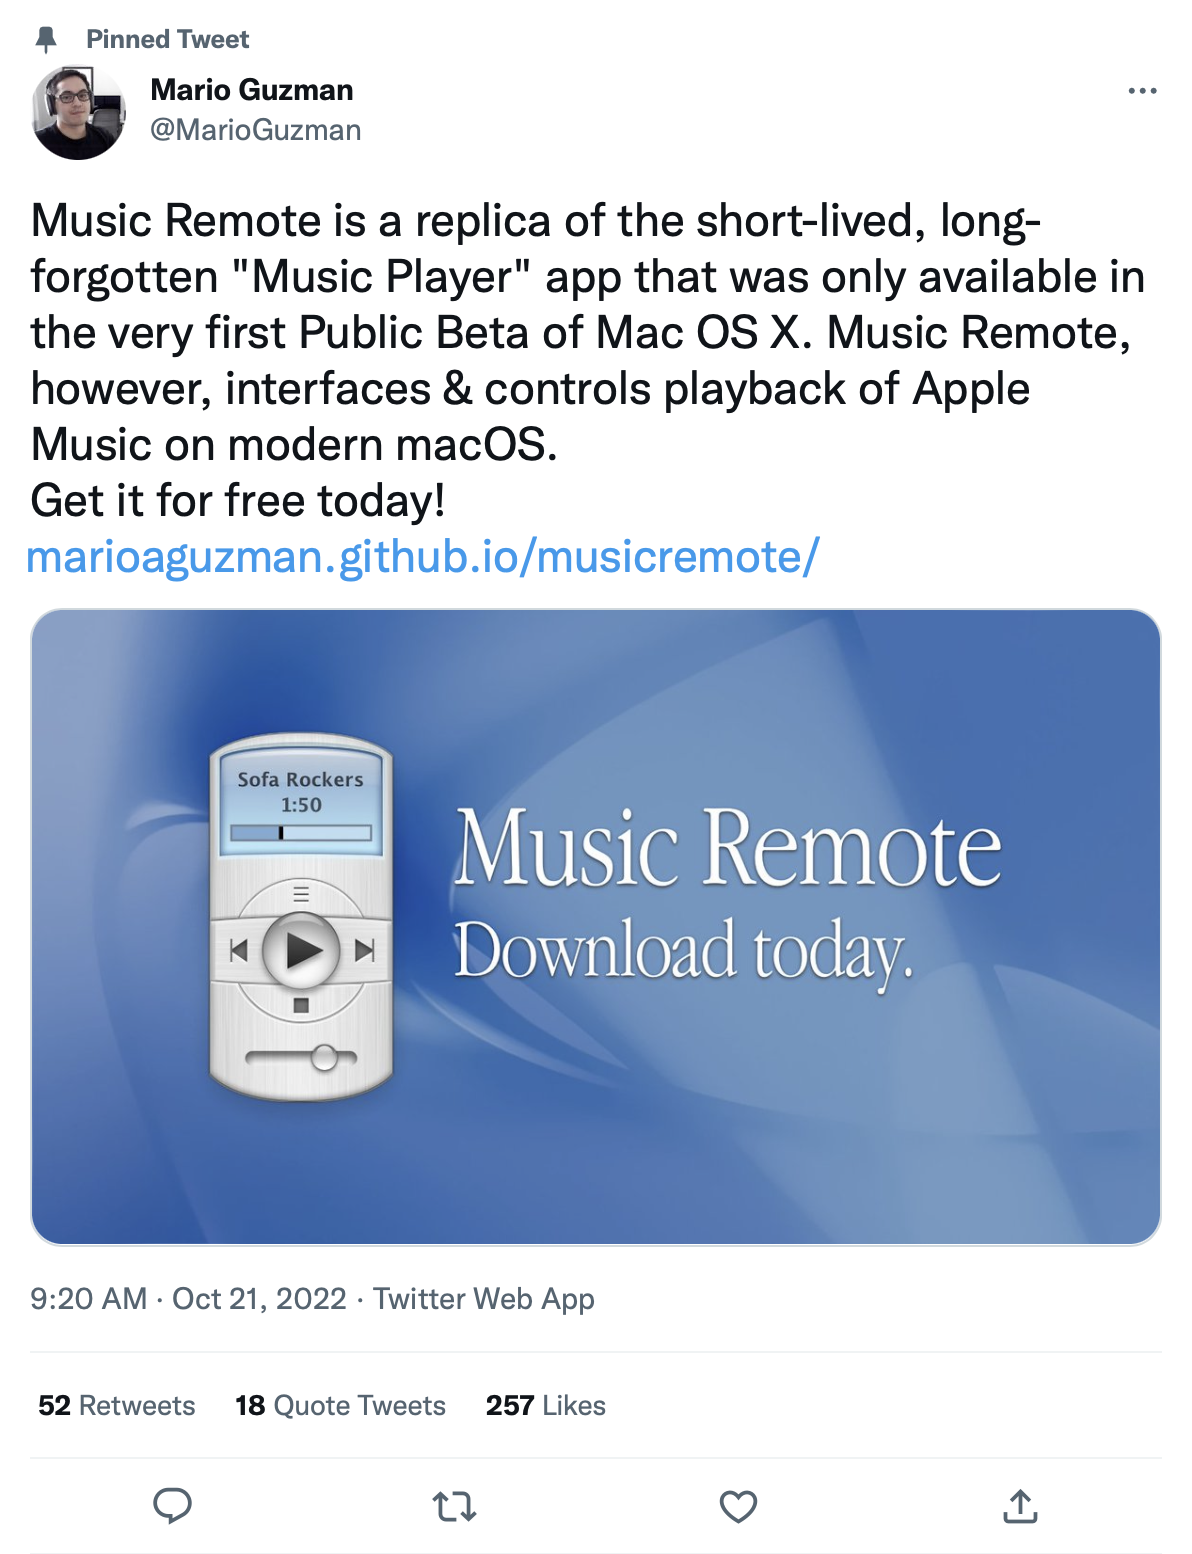 Mario Guzman announcing his new Music Remote App